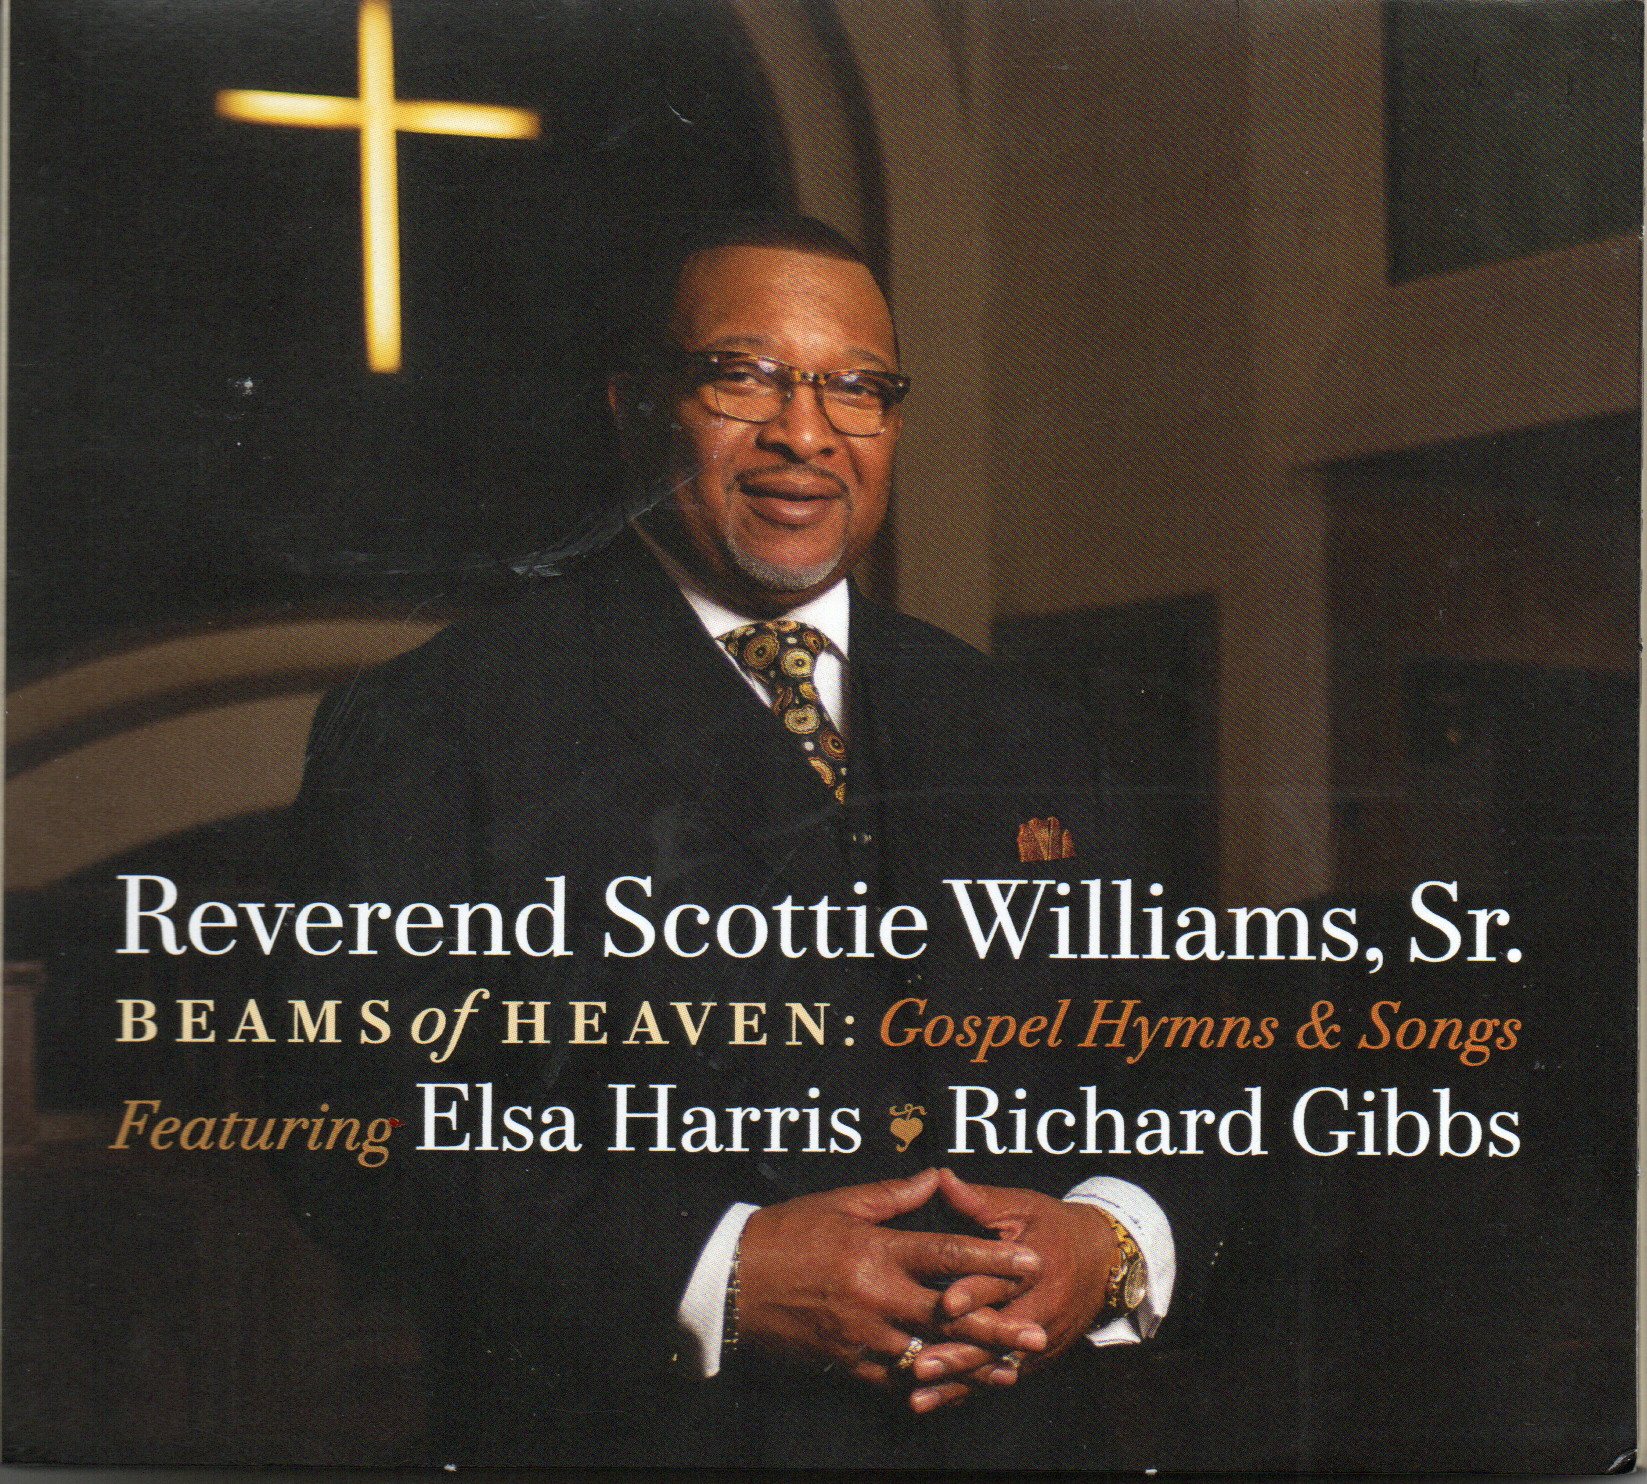 Reverend Scottie Williams Sr. "Beams Of Heaven: Gospel Hymns & Songs”